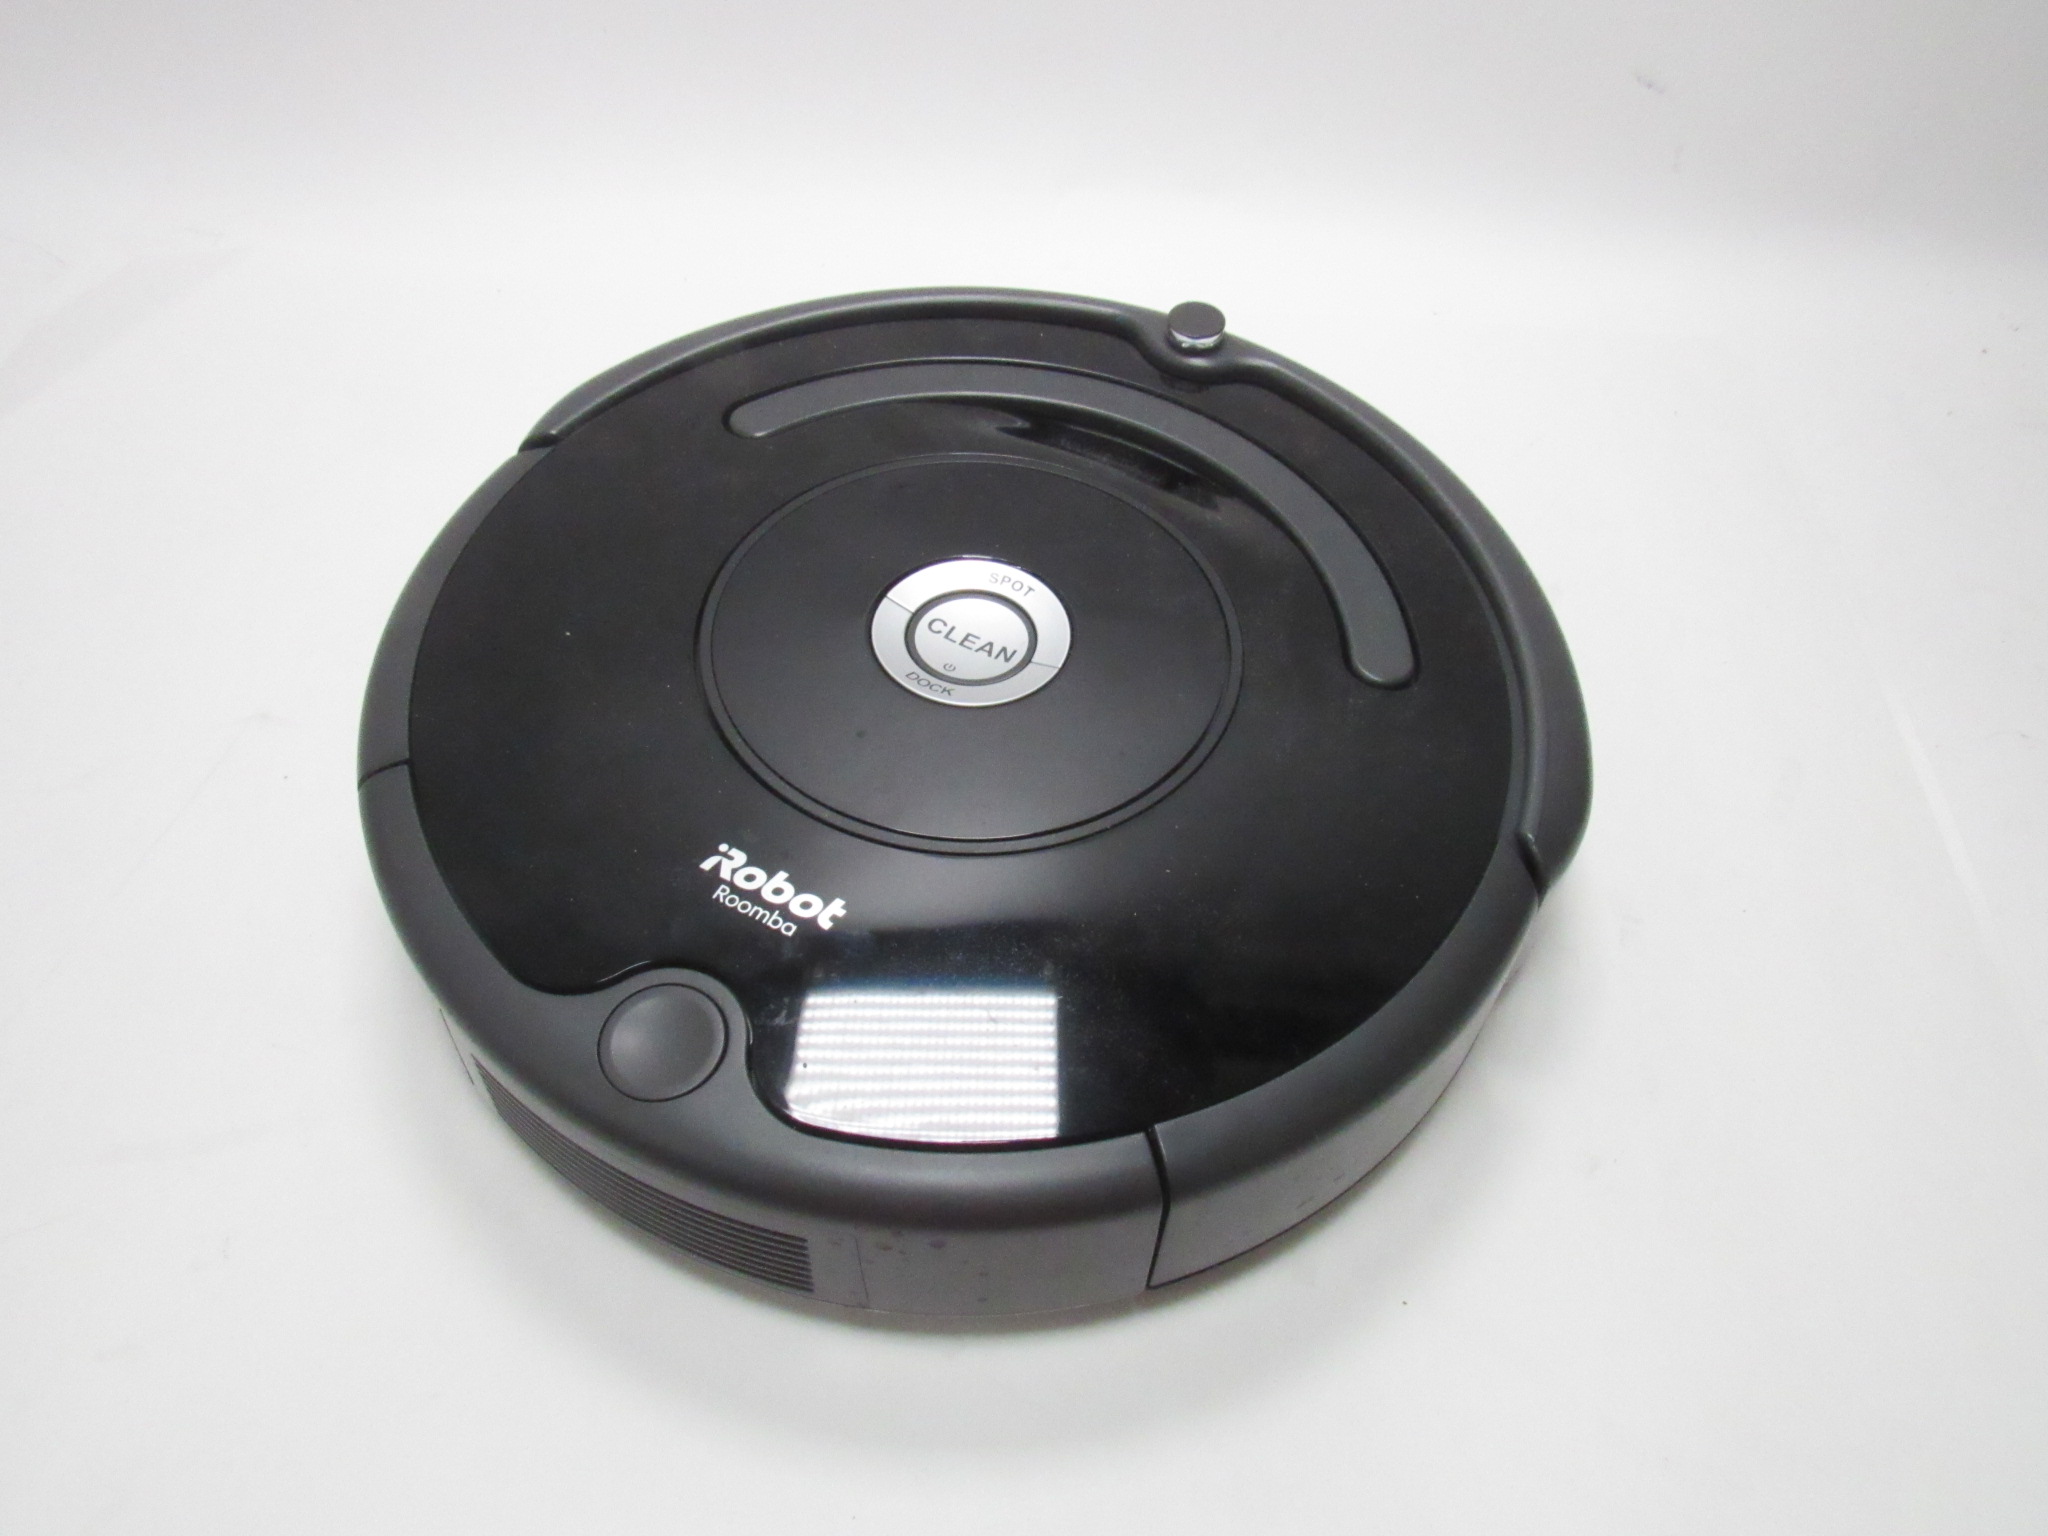 iRobot Roomba 675 robot vacuum review